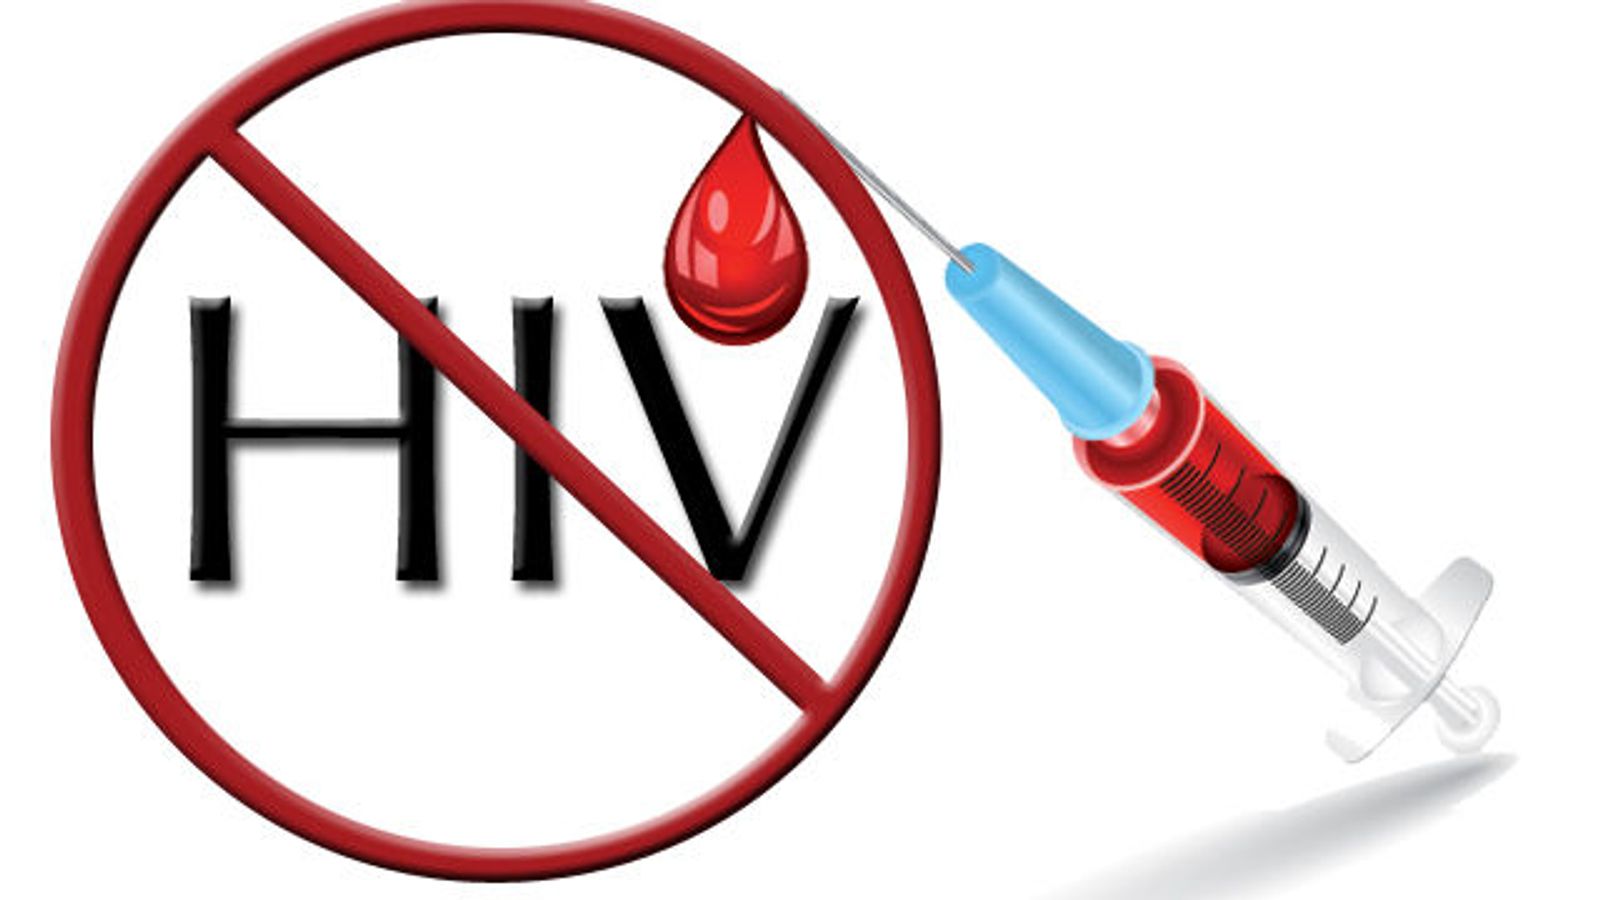 HIV Status Confirmed: False Positive